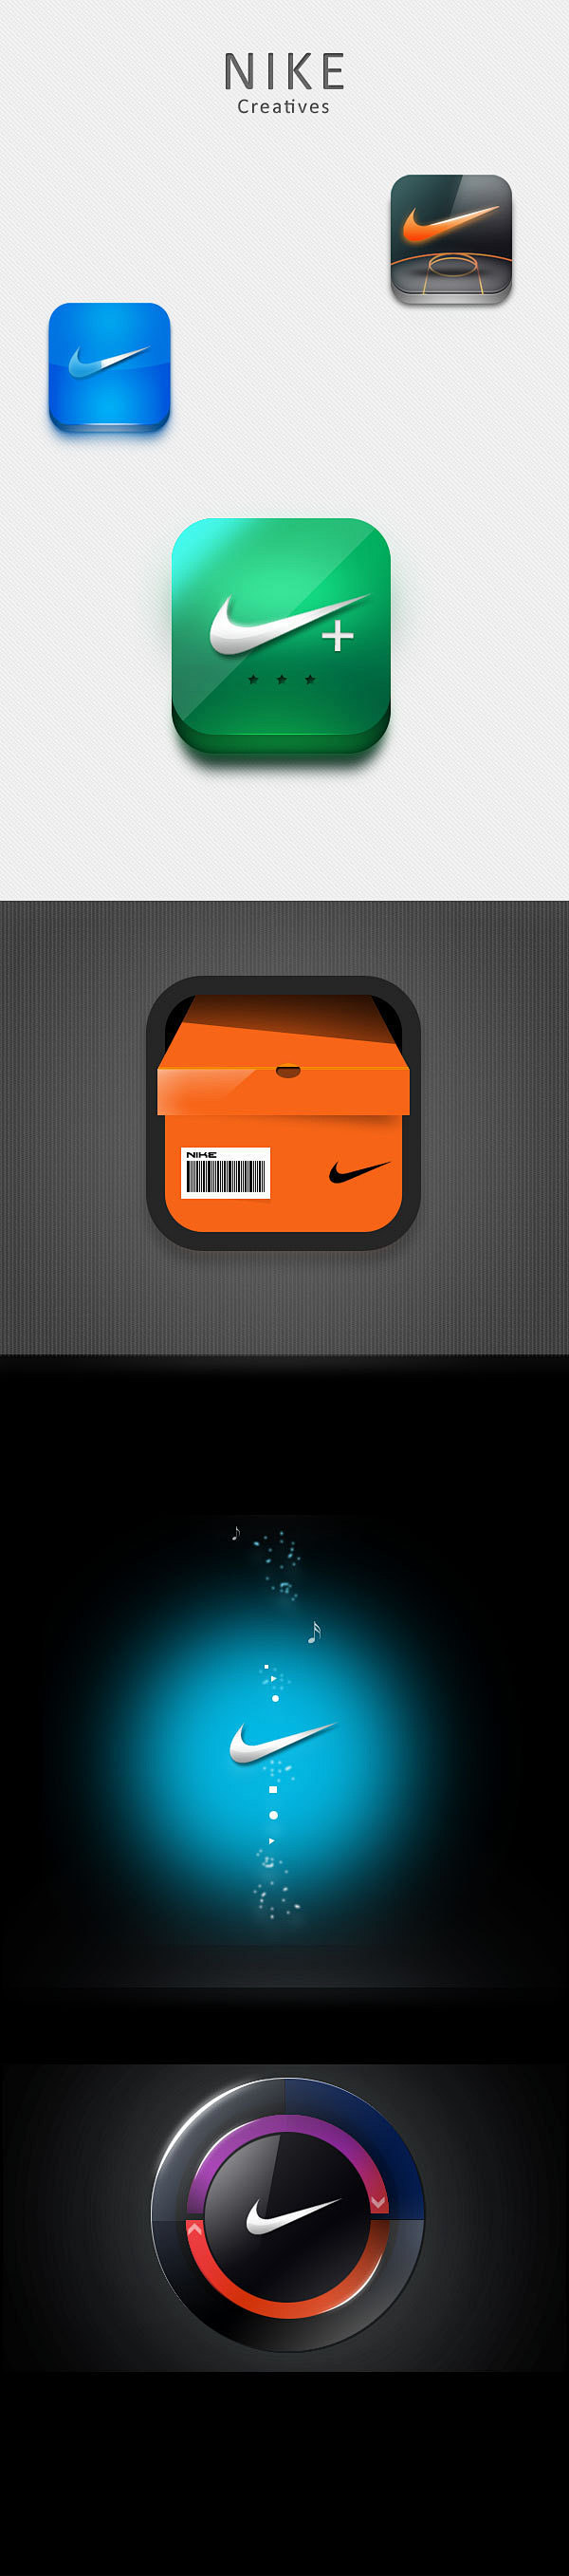 Nike creative ios : ...